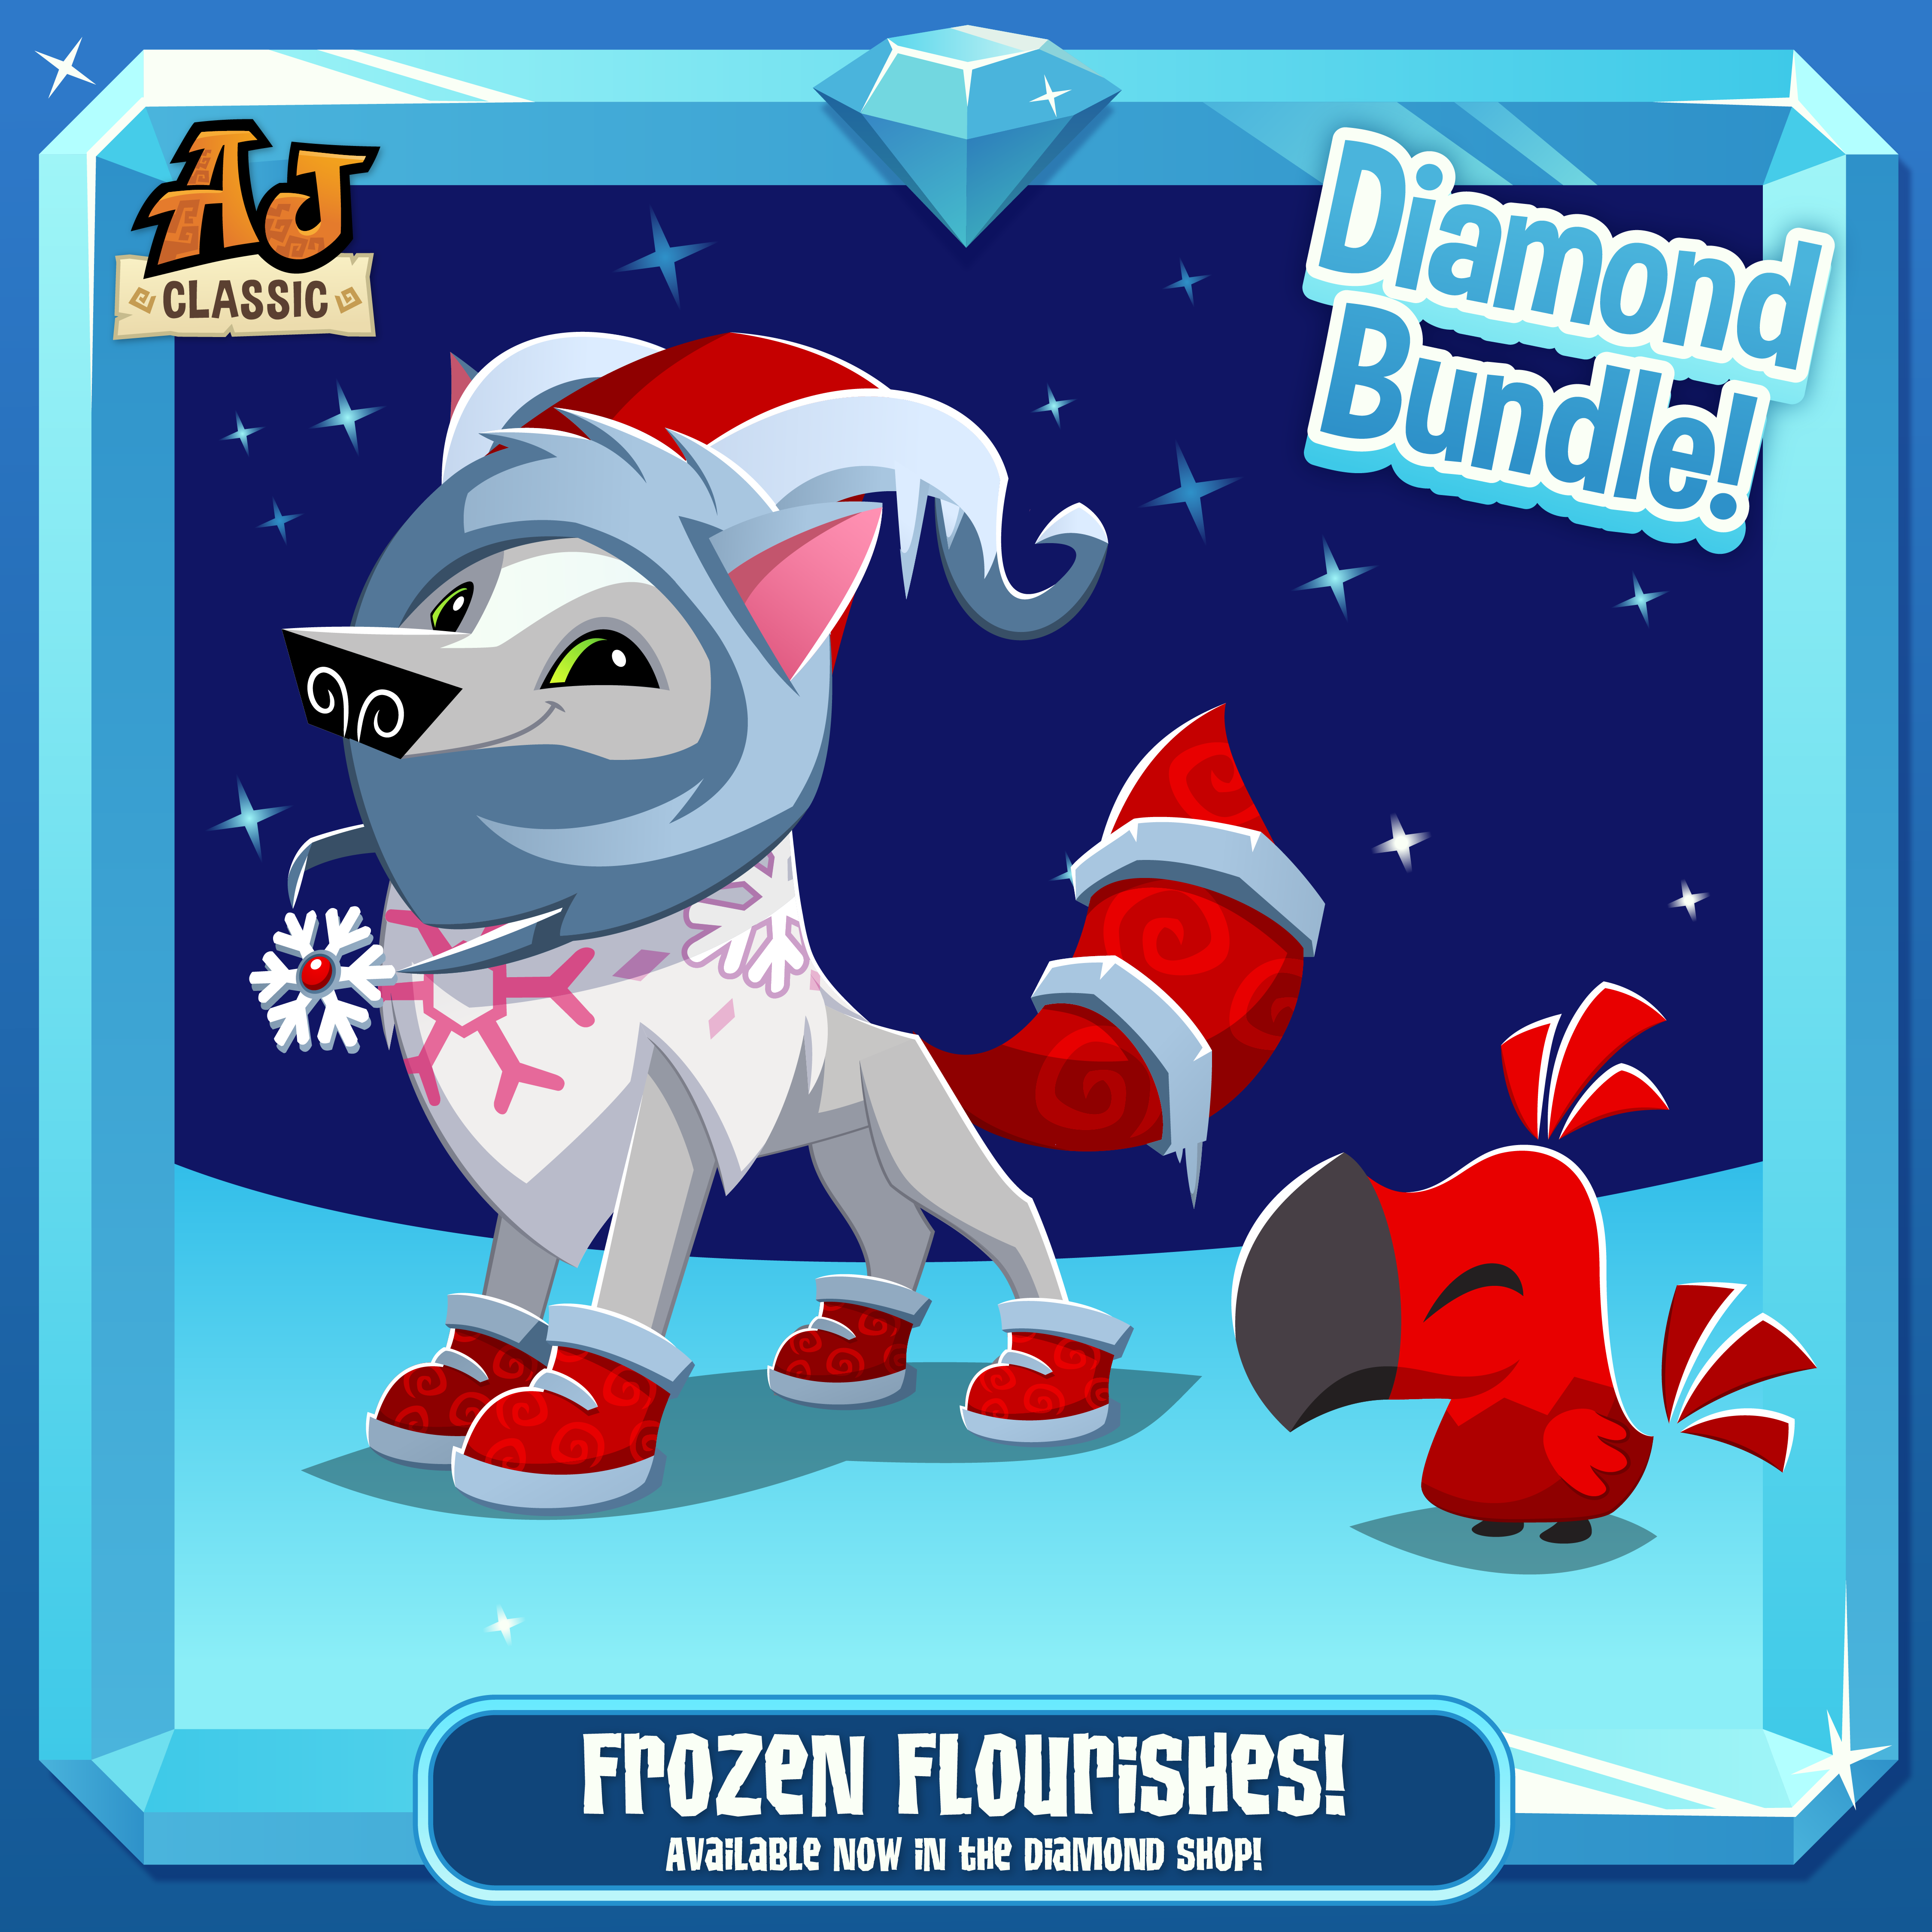 20220106 Jan Diamond Bundle Frozen Flurries-01